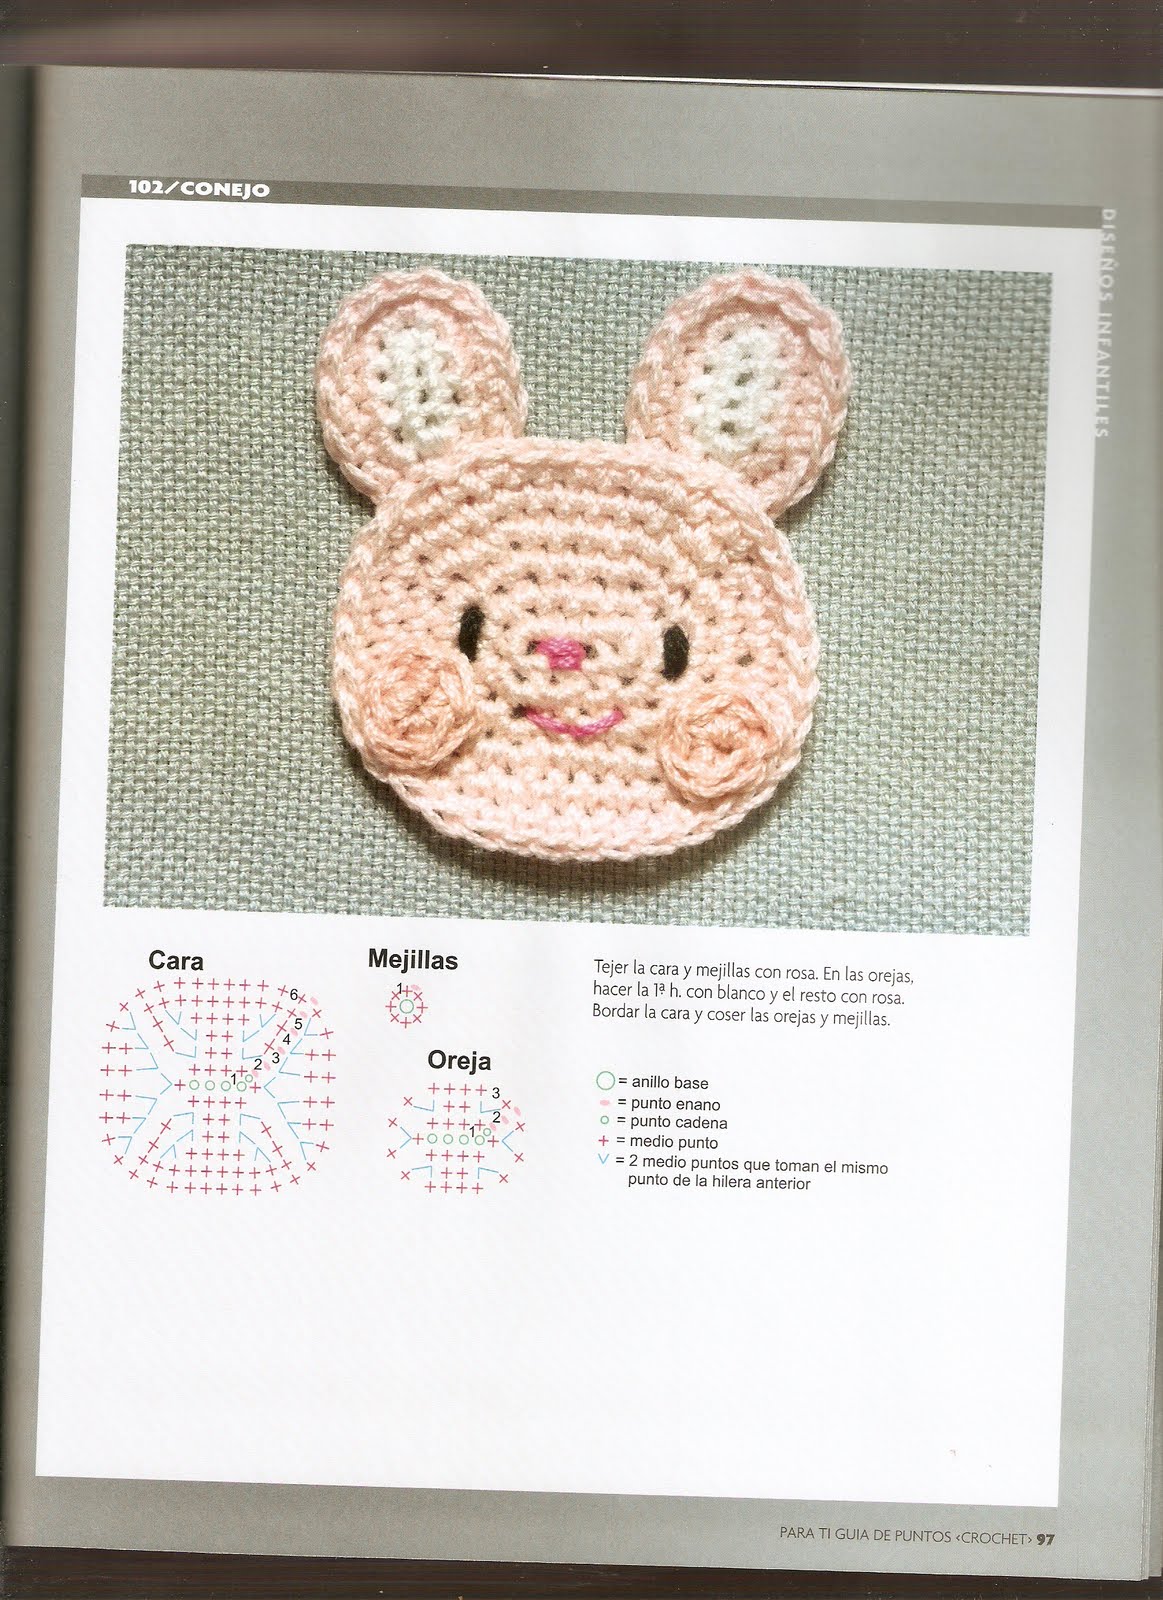 crochet pink rabbit application